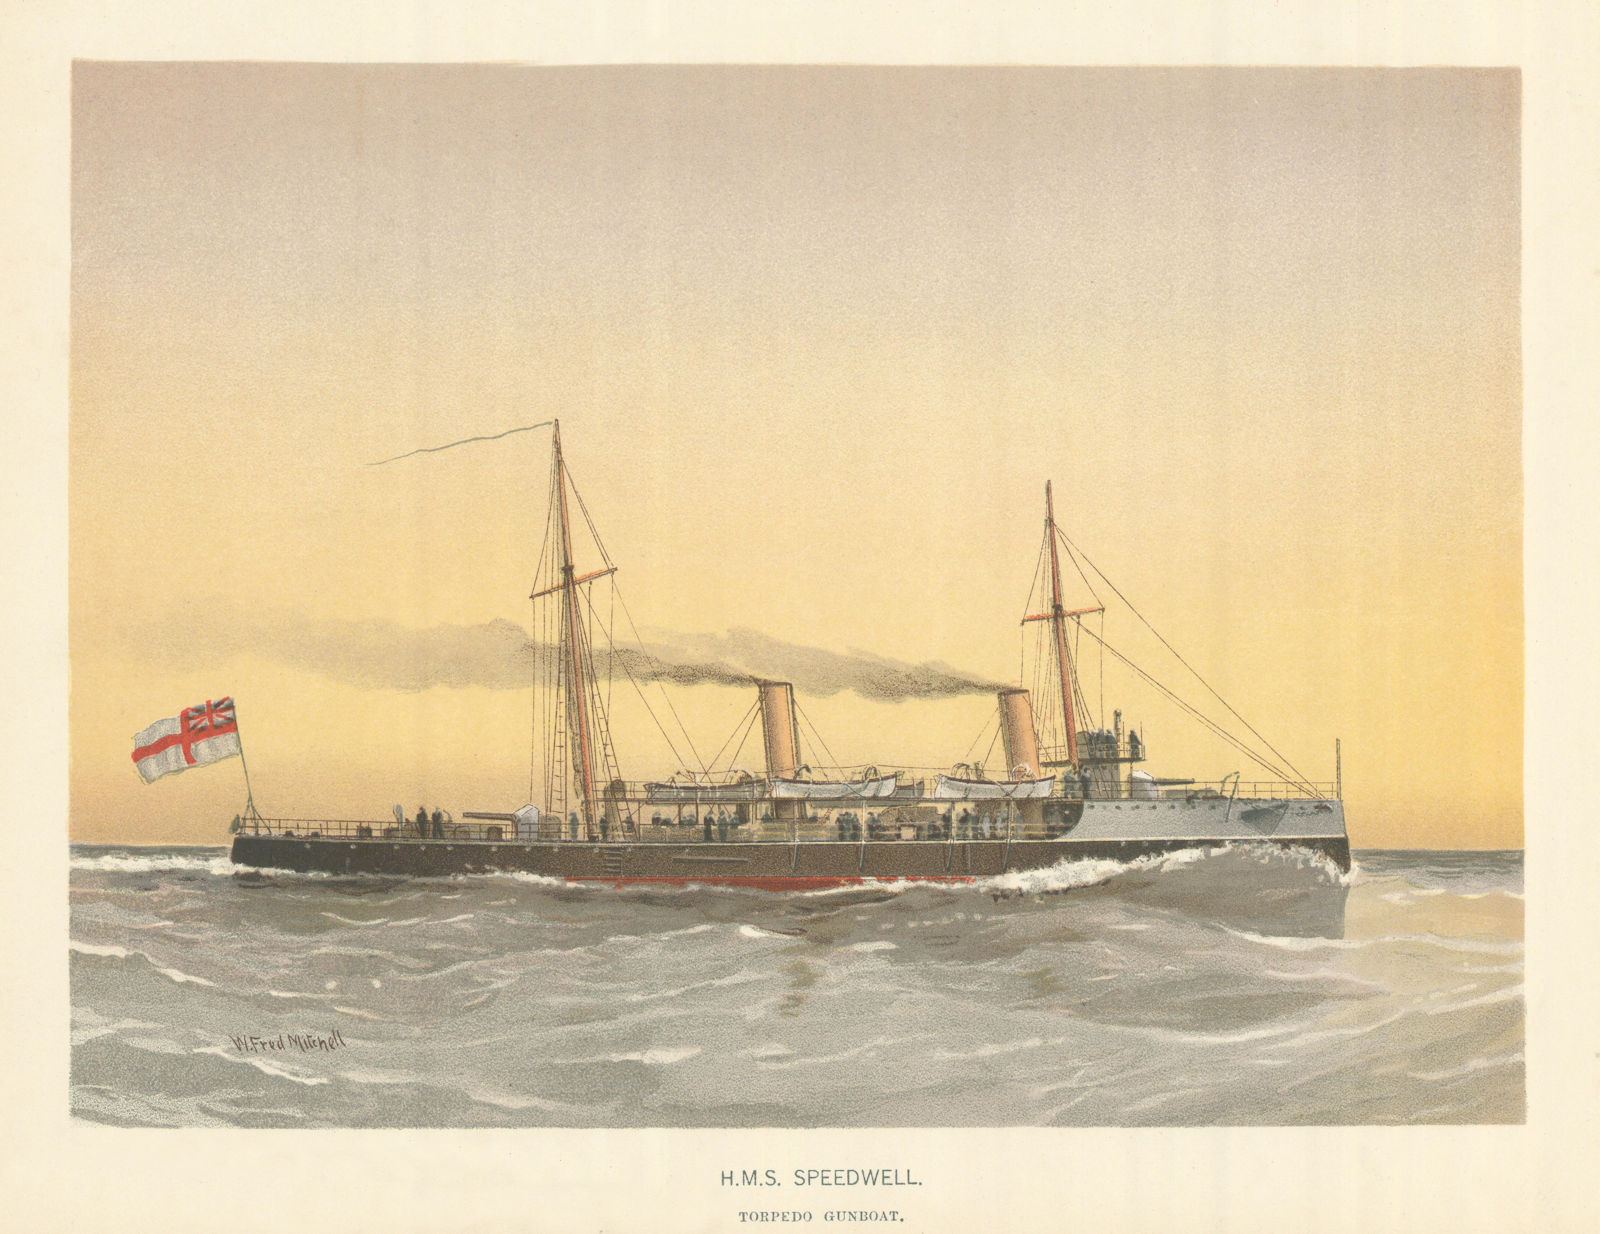 H.M.S. "Speedwell" - torpedo gunboat (1889) by W.F. Mitchell. Royal Navy 1893